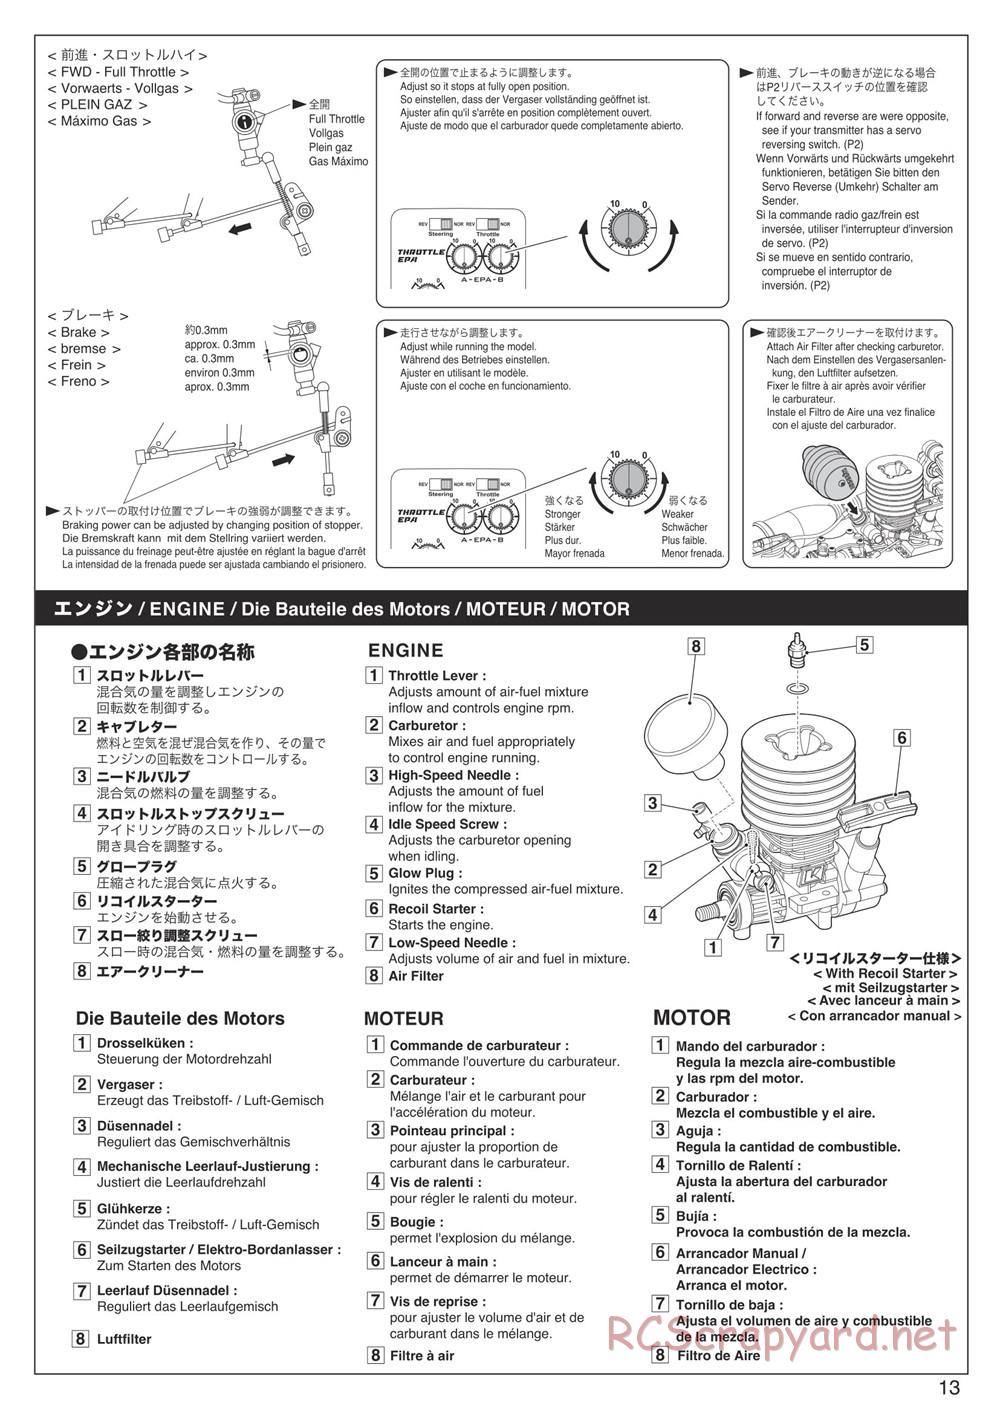 Kyosho - DBX 2.0 - Manual - Page 13